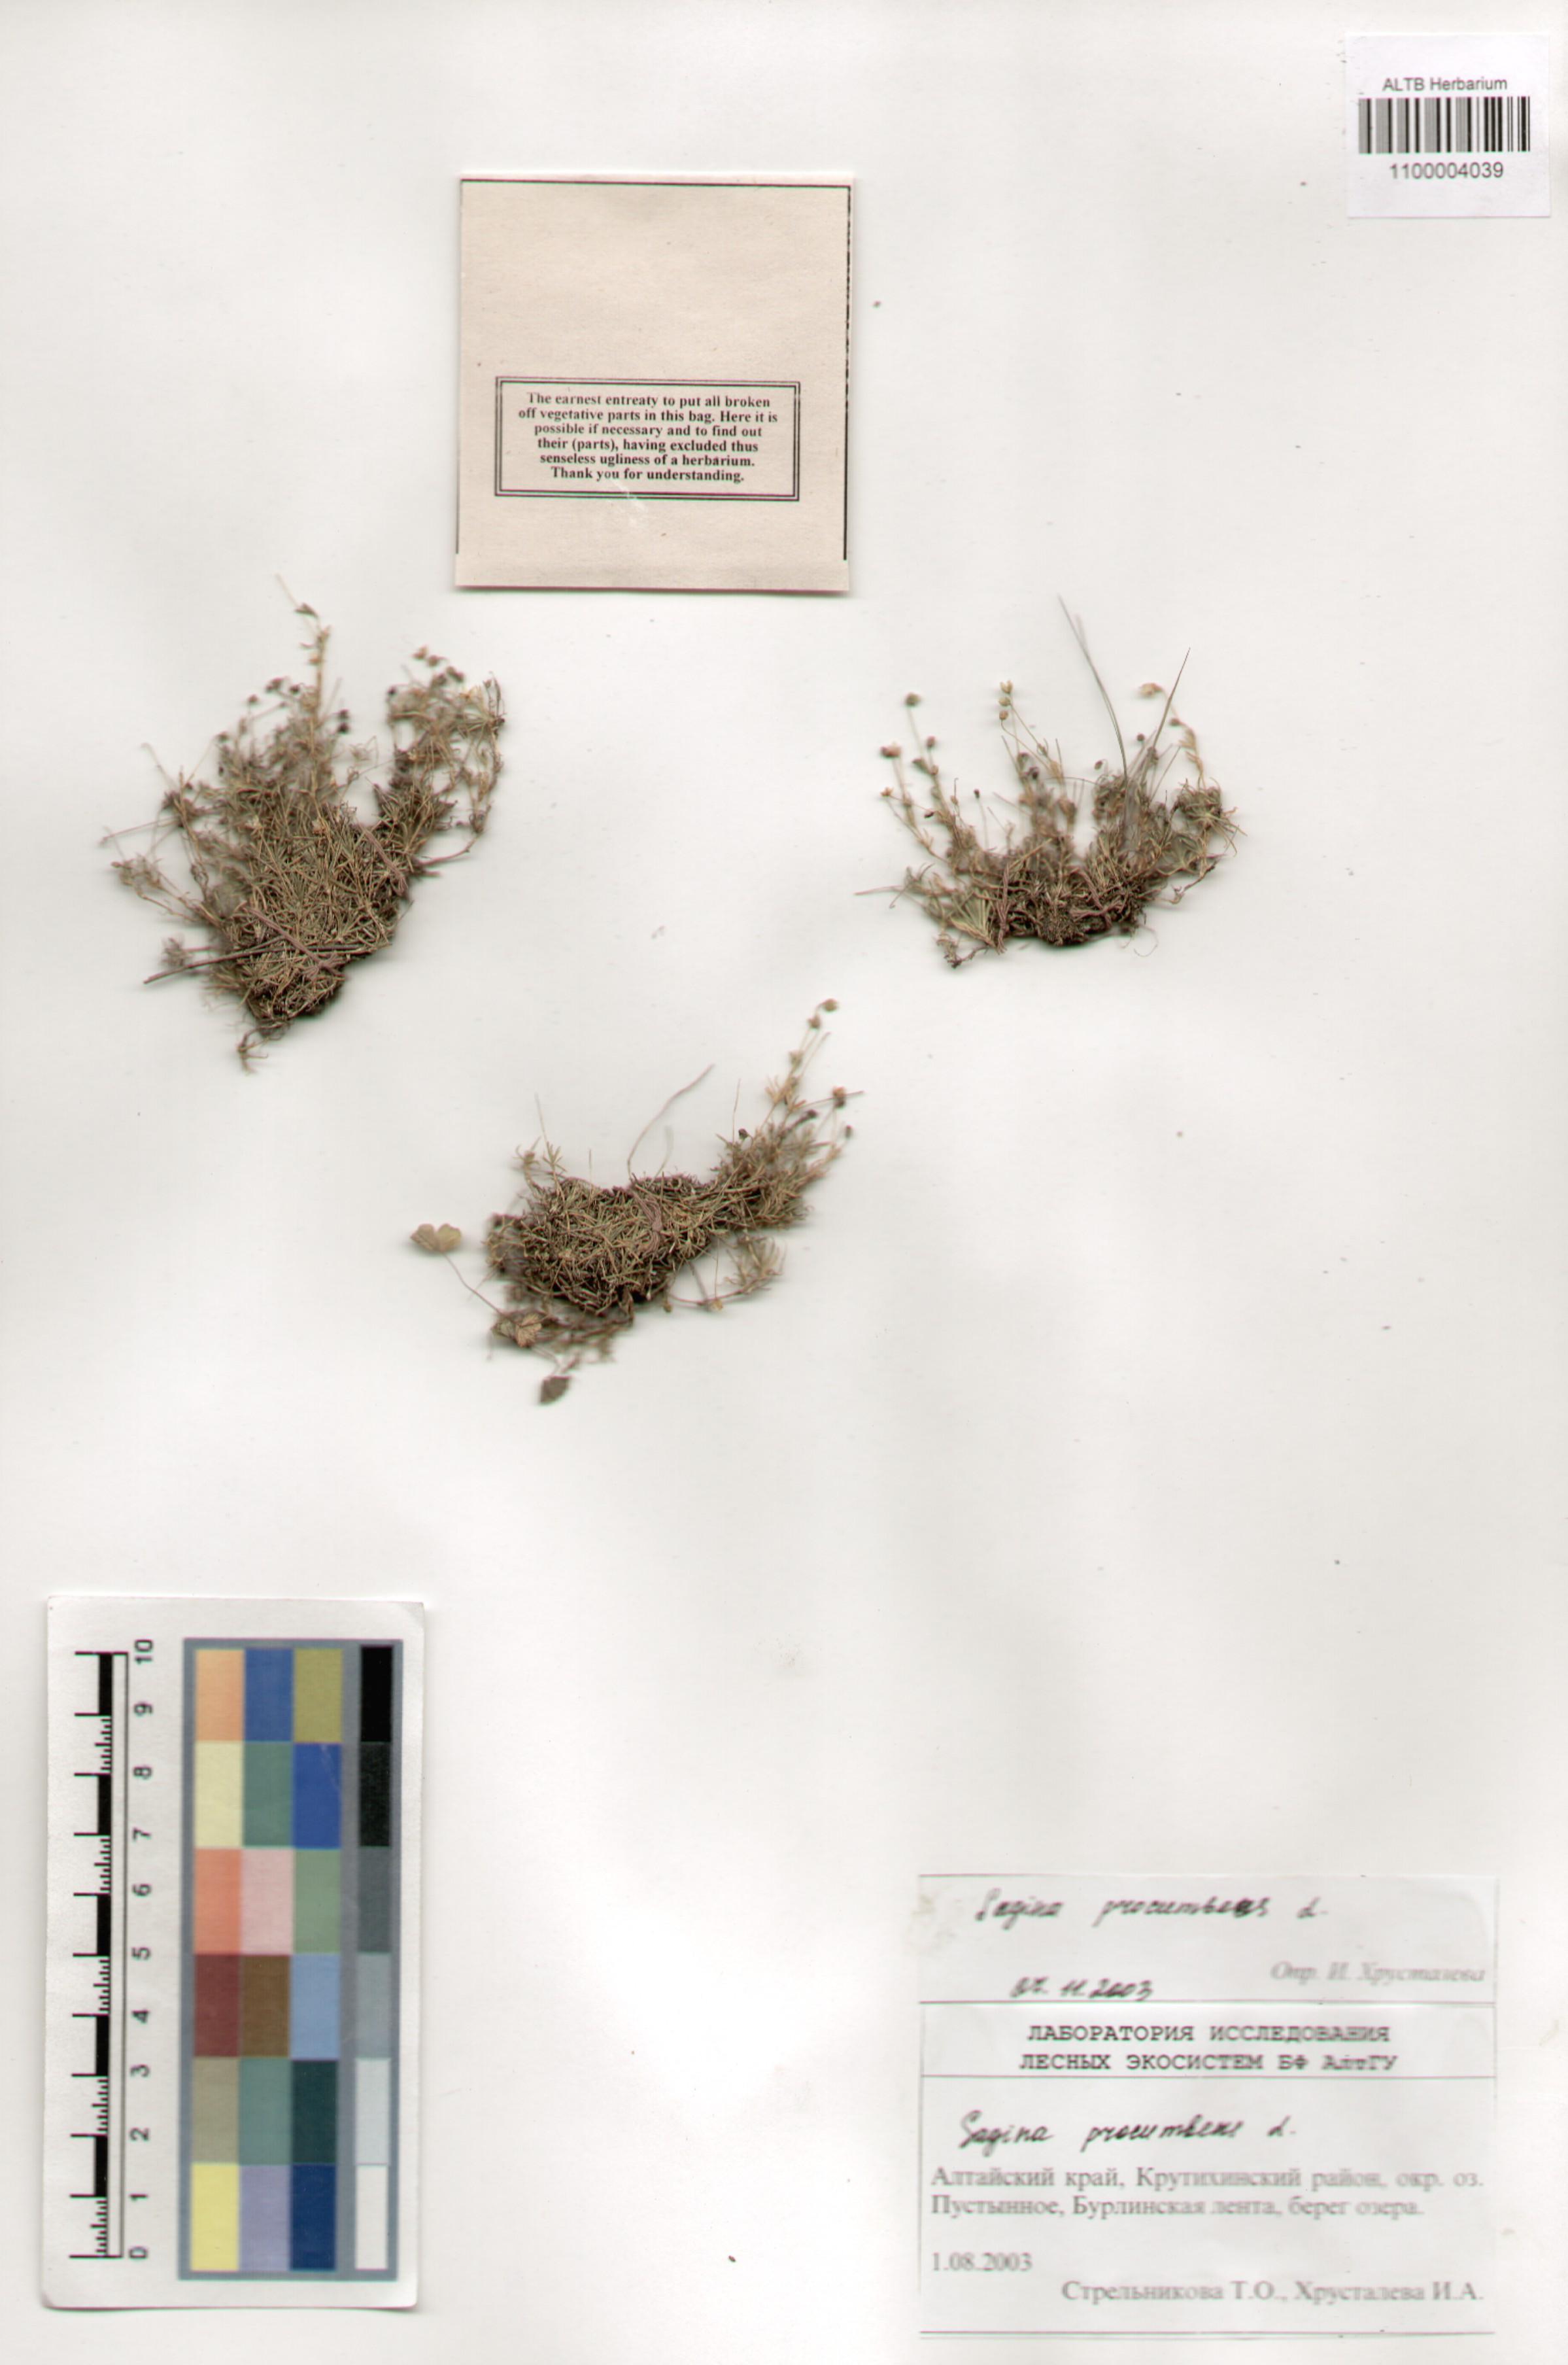 Caryophyllaceae,Sagina procumbens L.